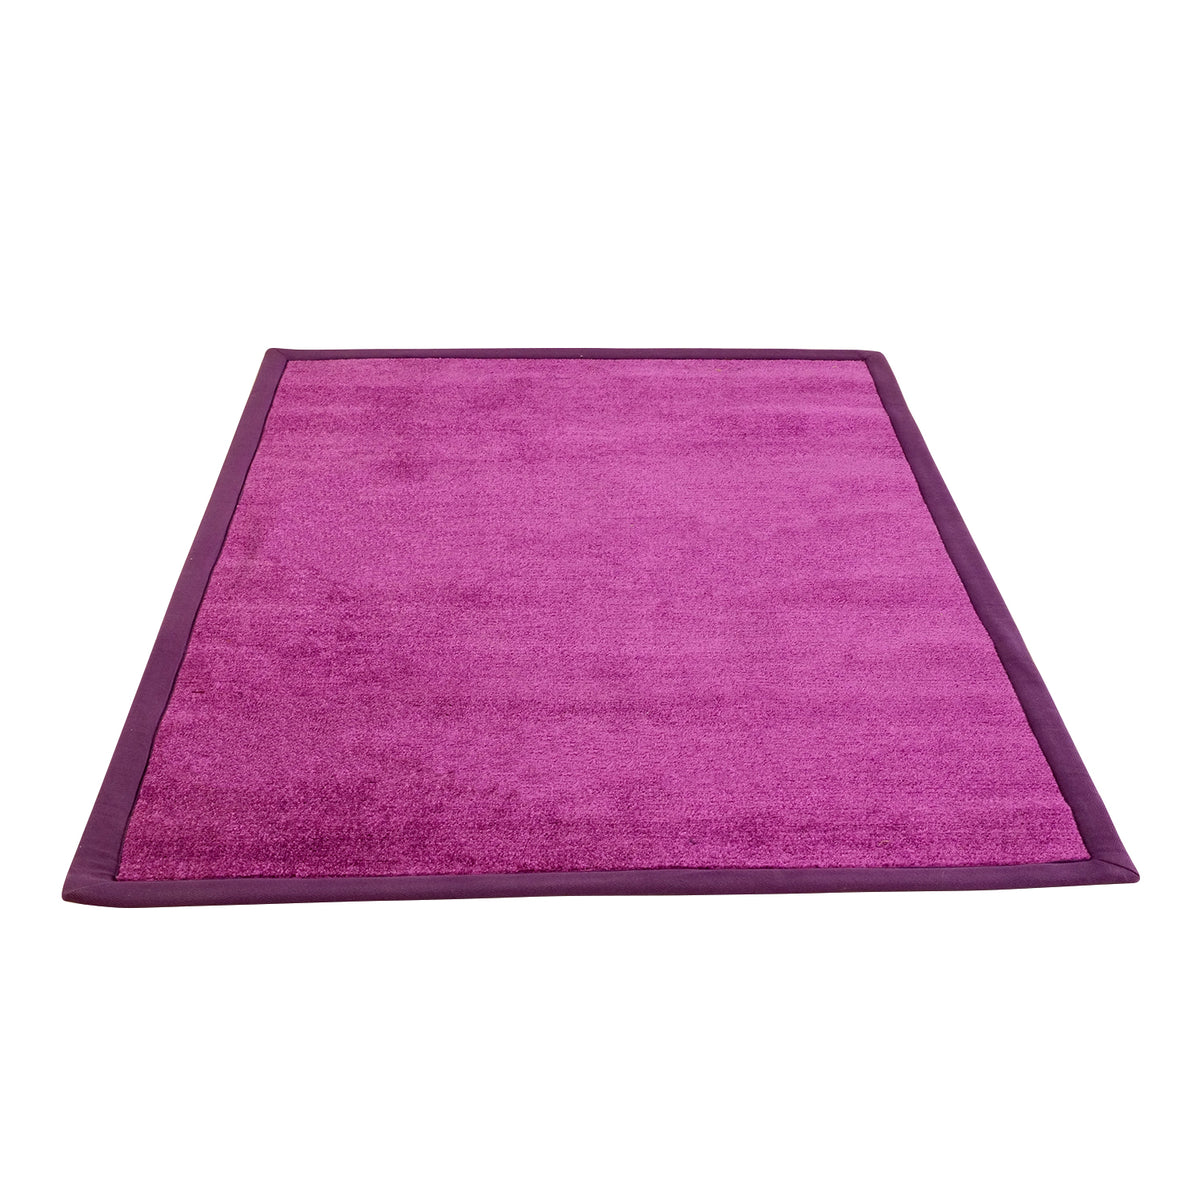 OnlyMat Purple Luxury Carpet with Anti-Slip Backing Entrance Mat Hall Mat Living Room 4feet x 6feet